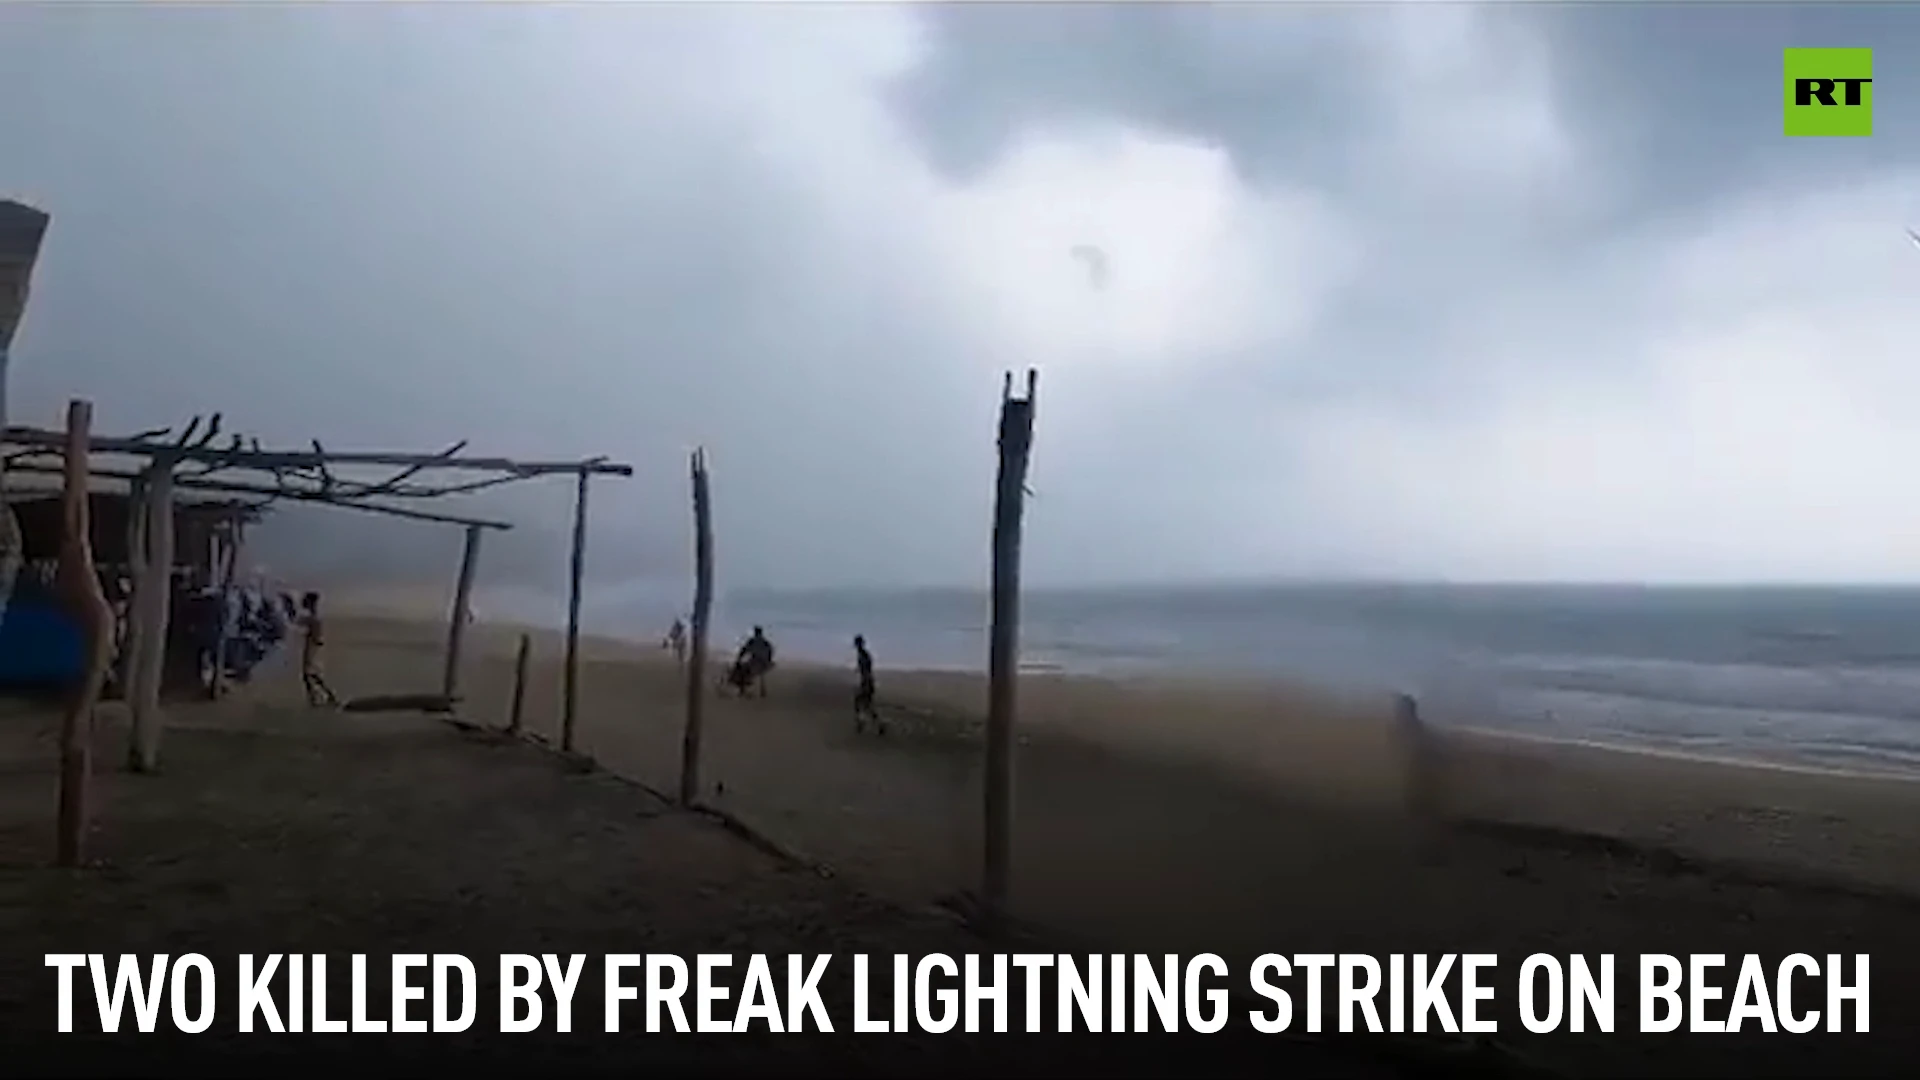 Two killed by freak lightning strike on beach